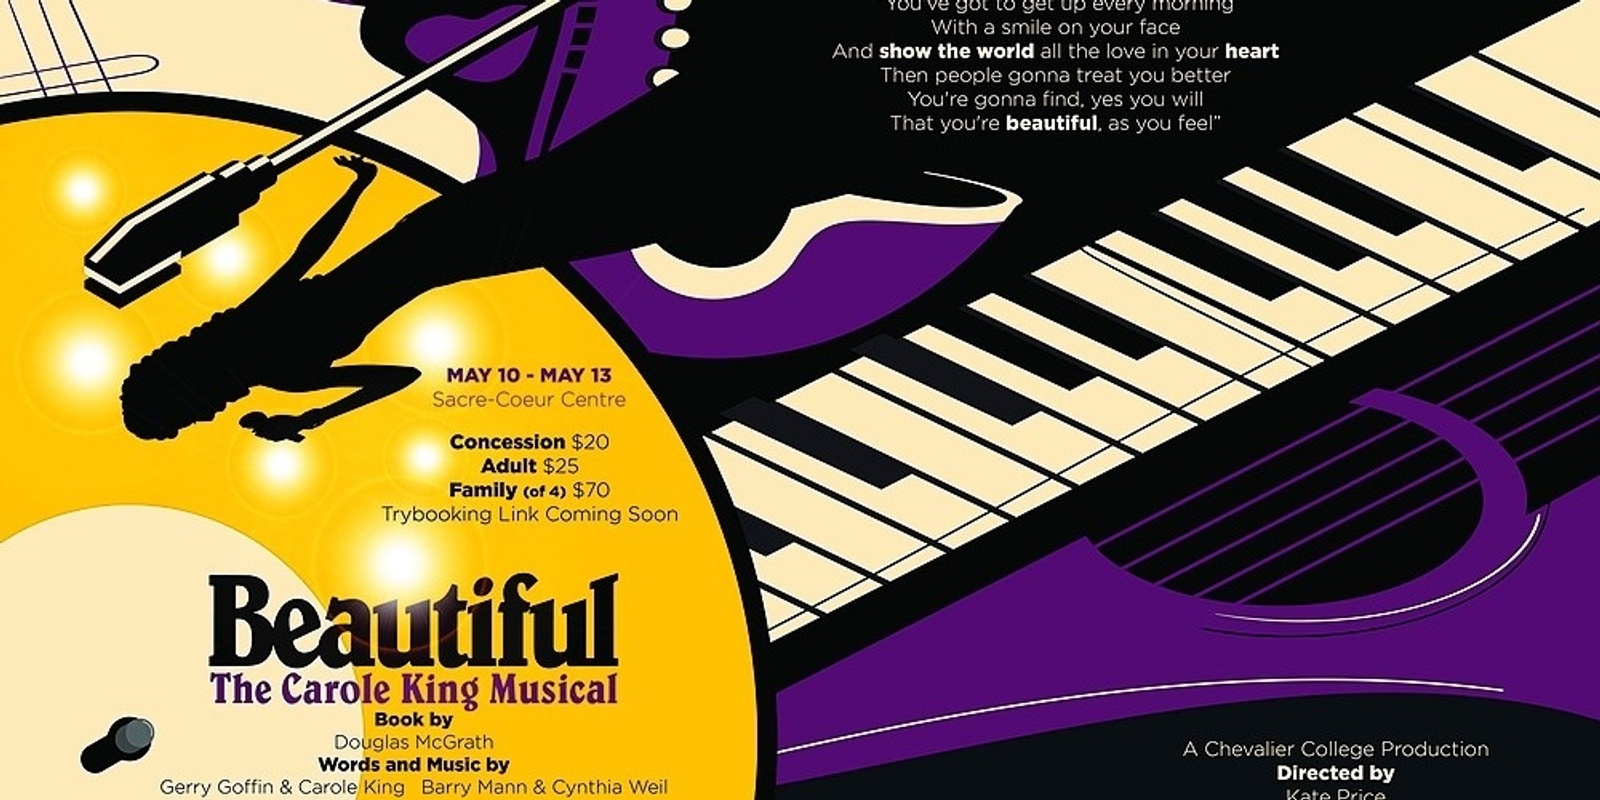 Beautiful - The Carole King Musical 